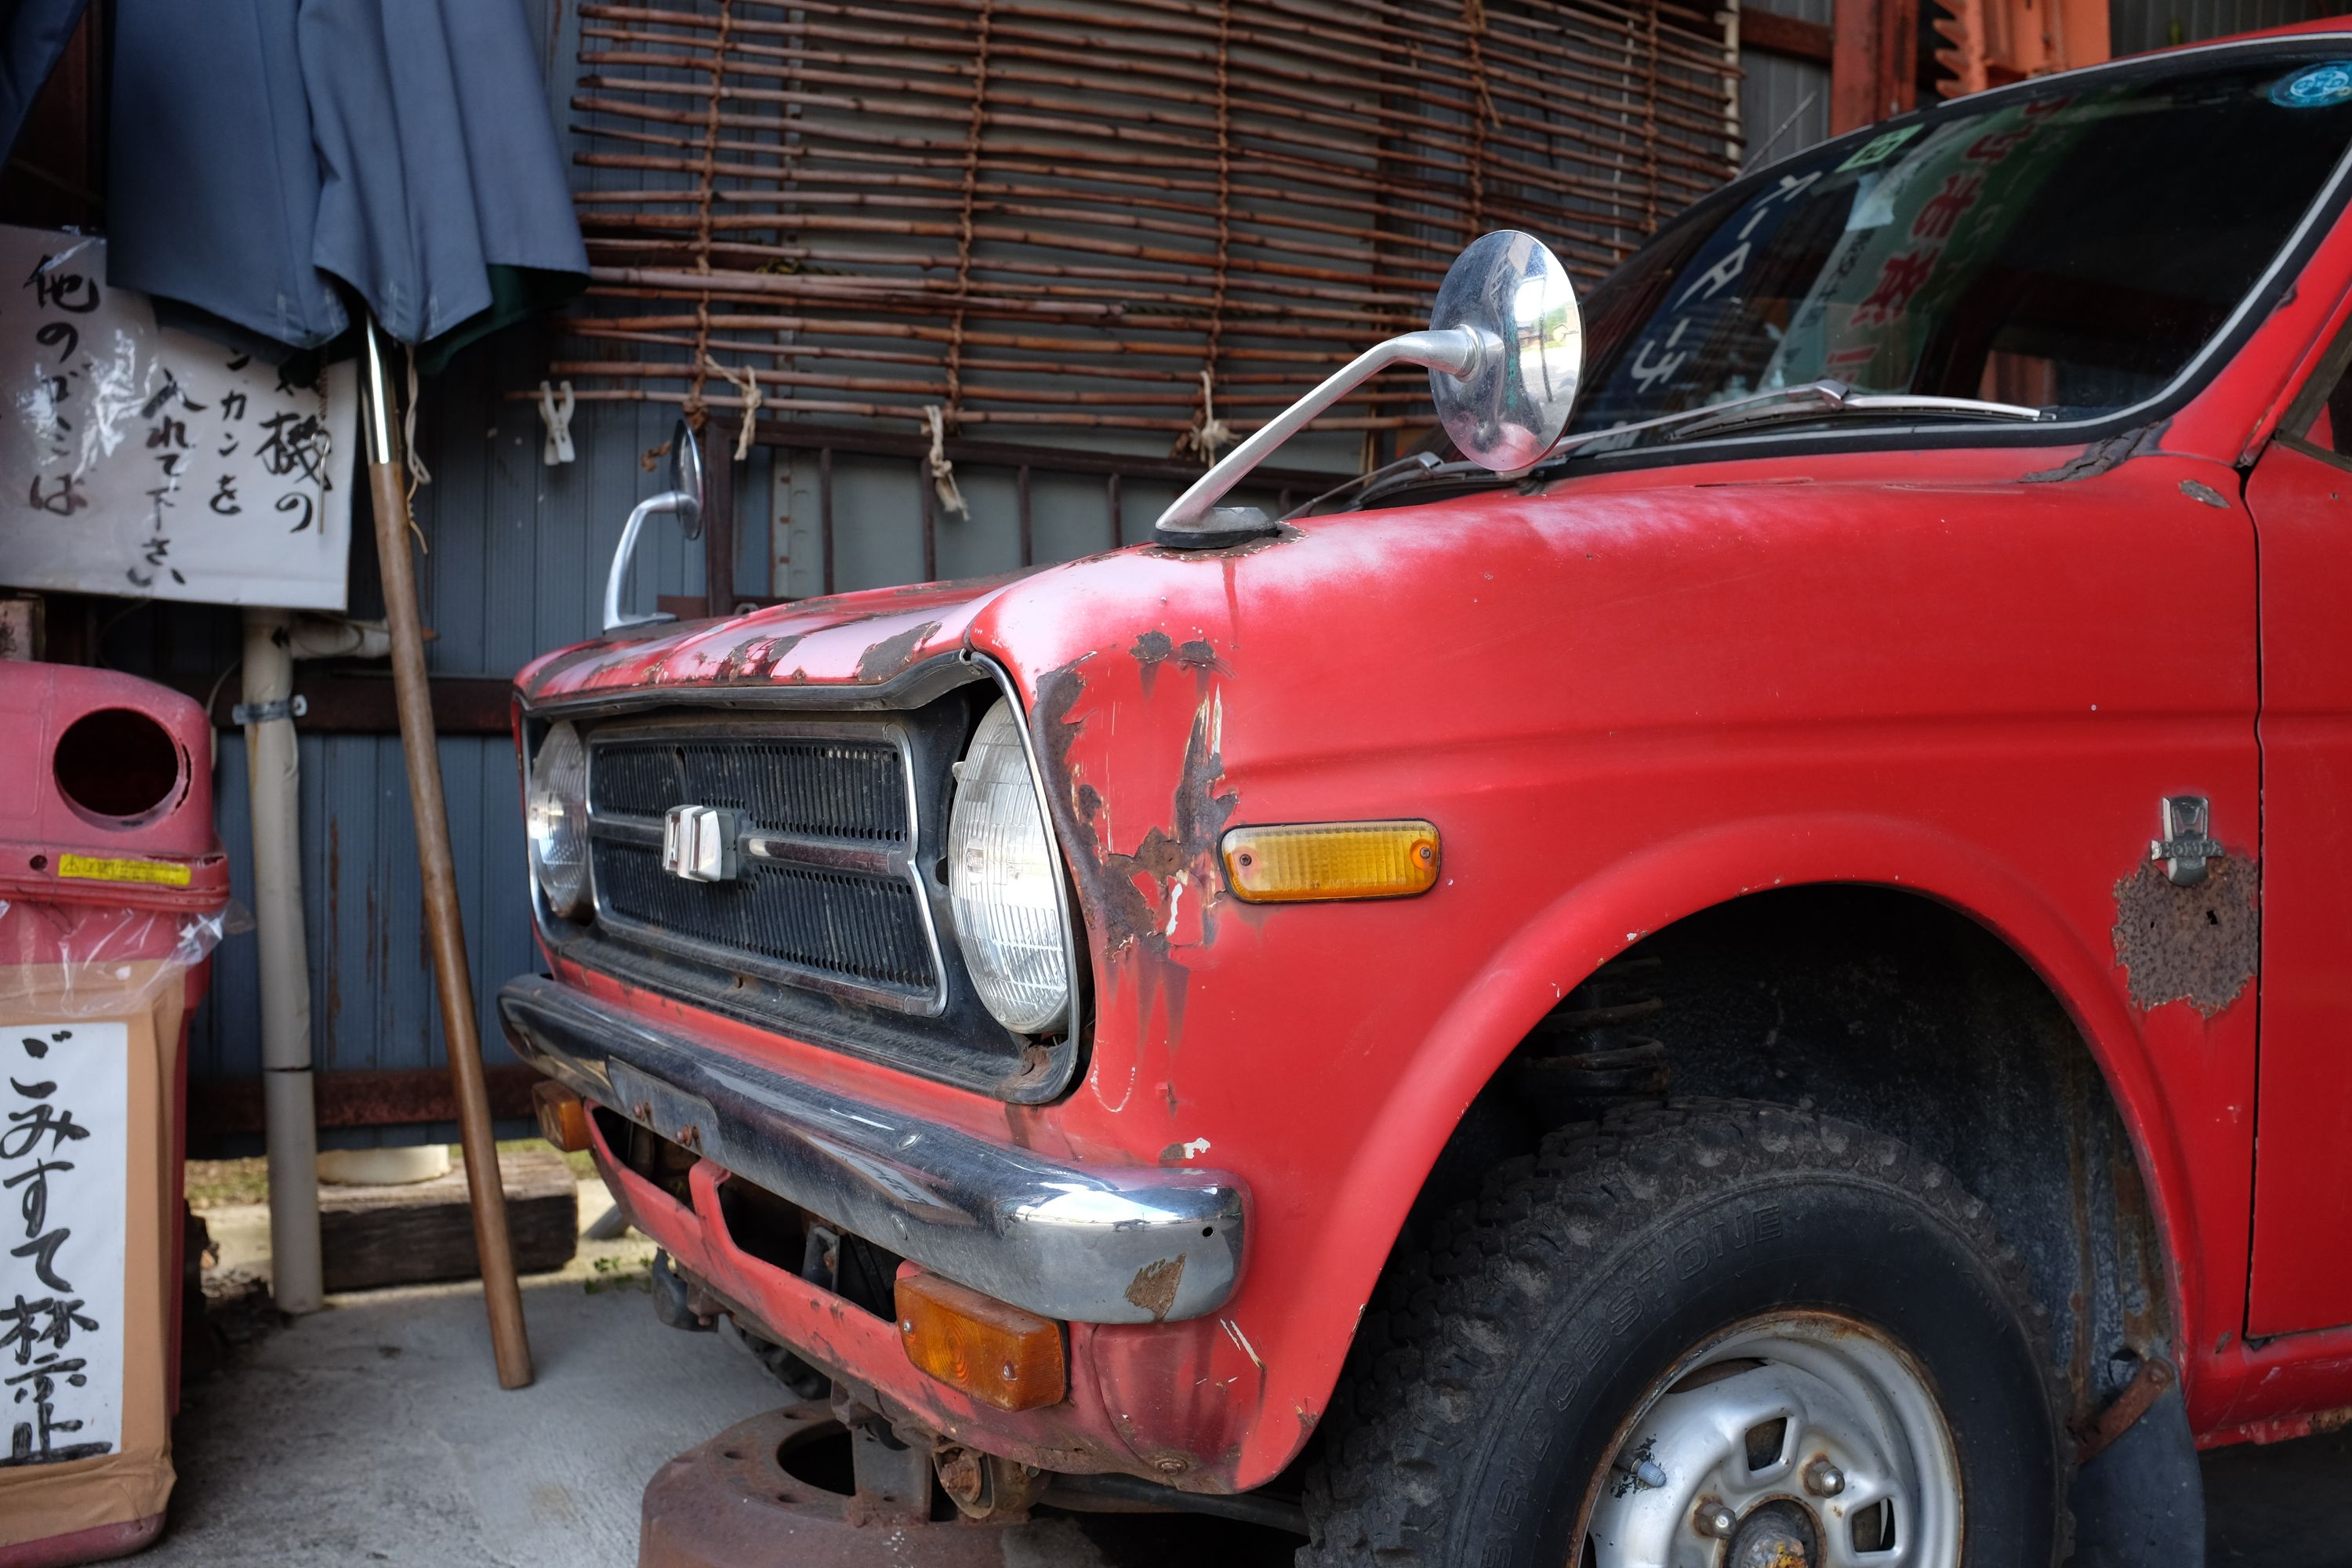 A very old red Honda hatchback in a garage.